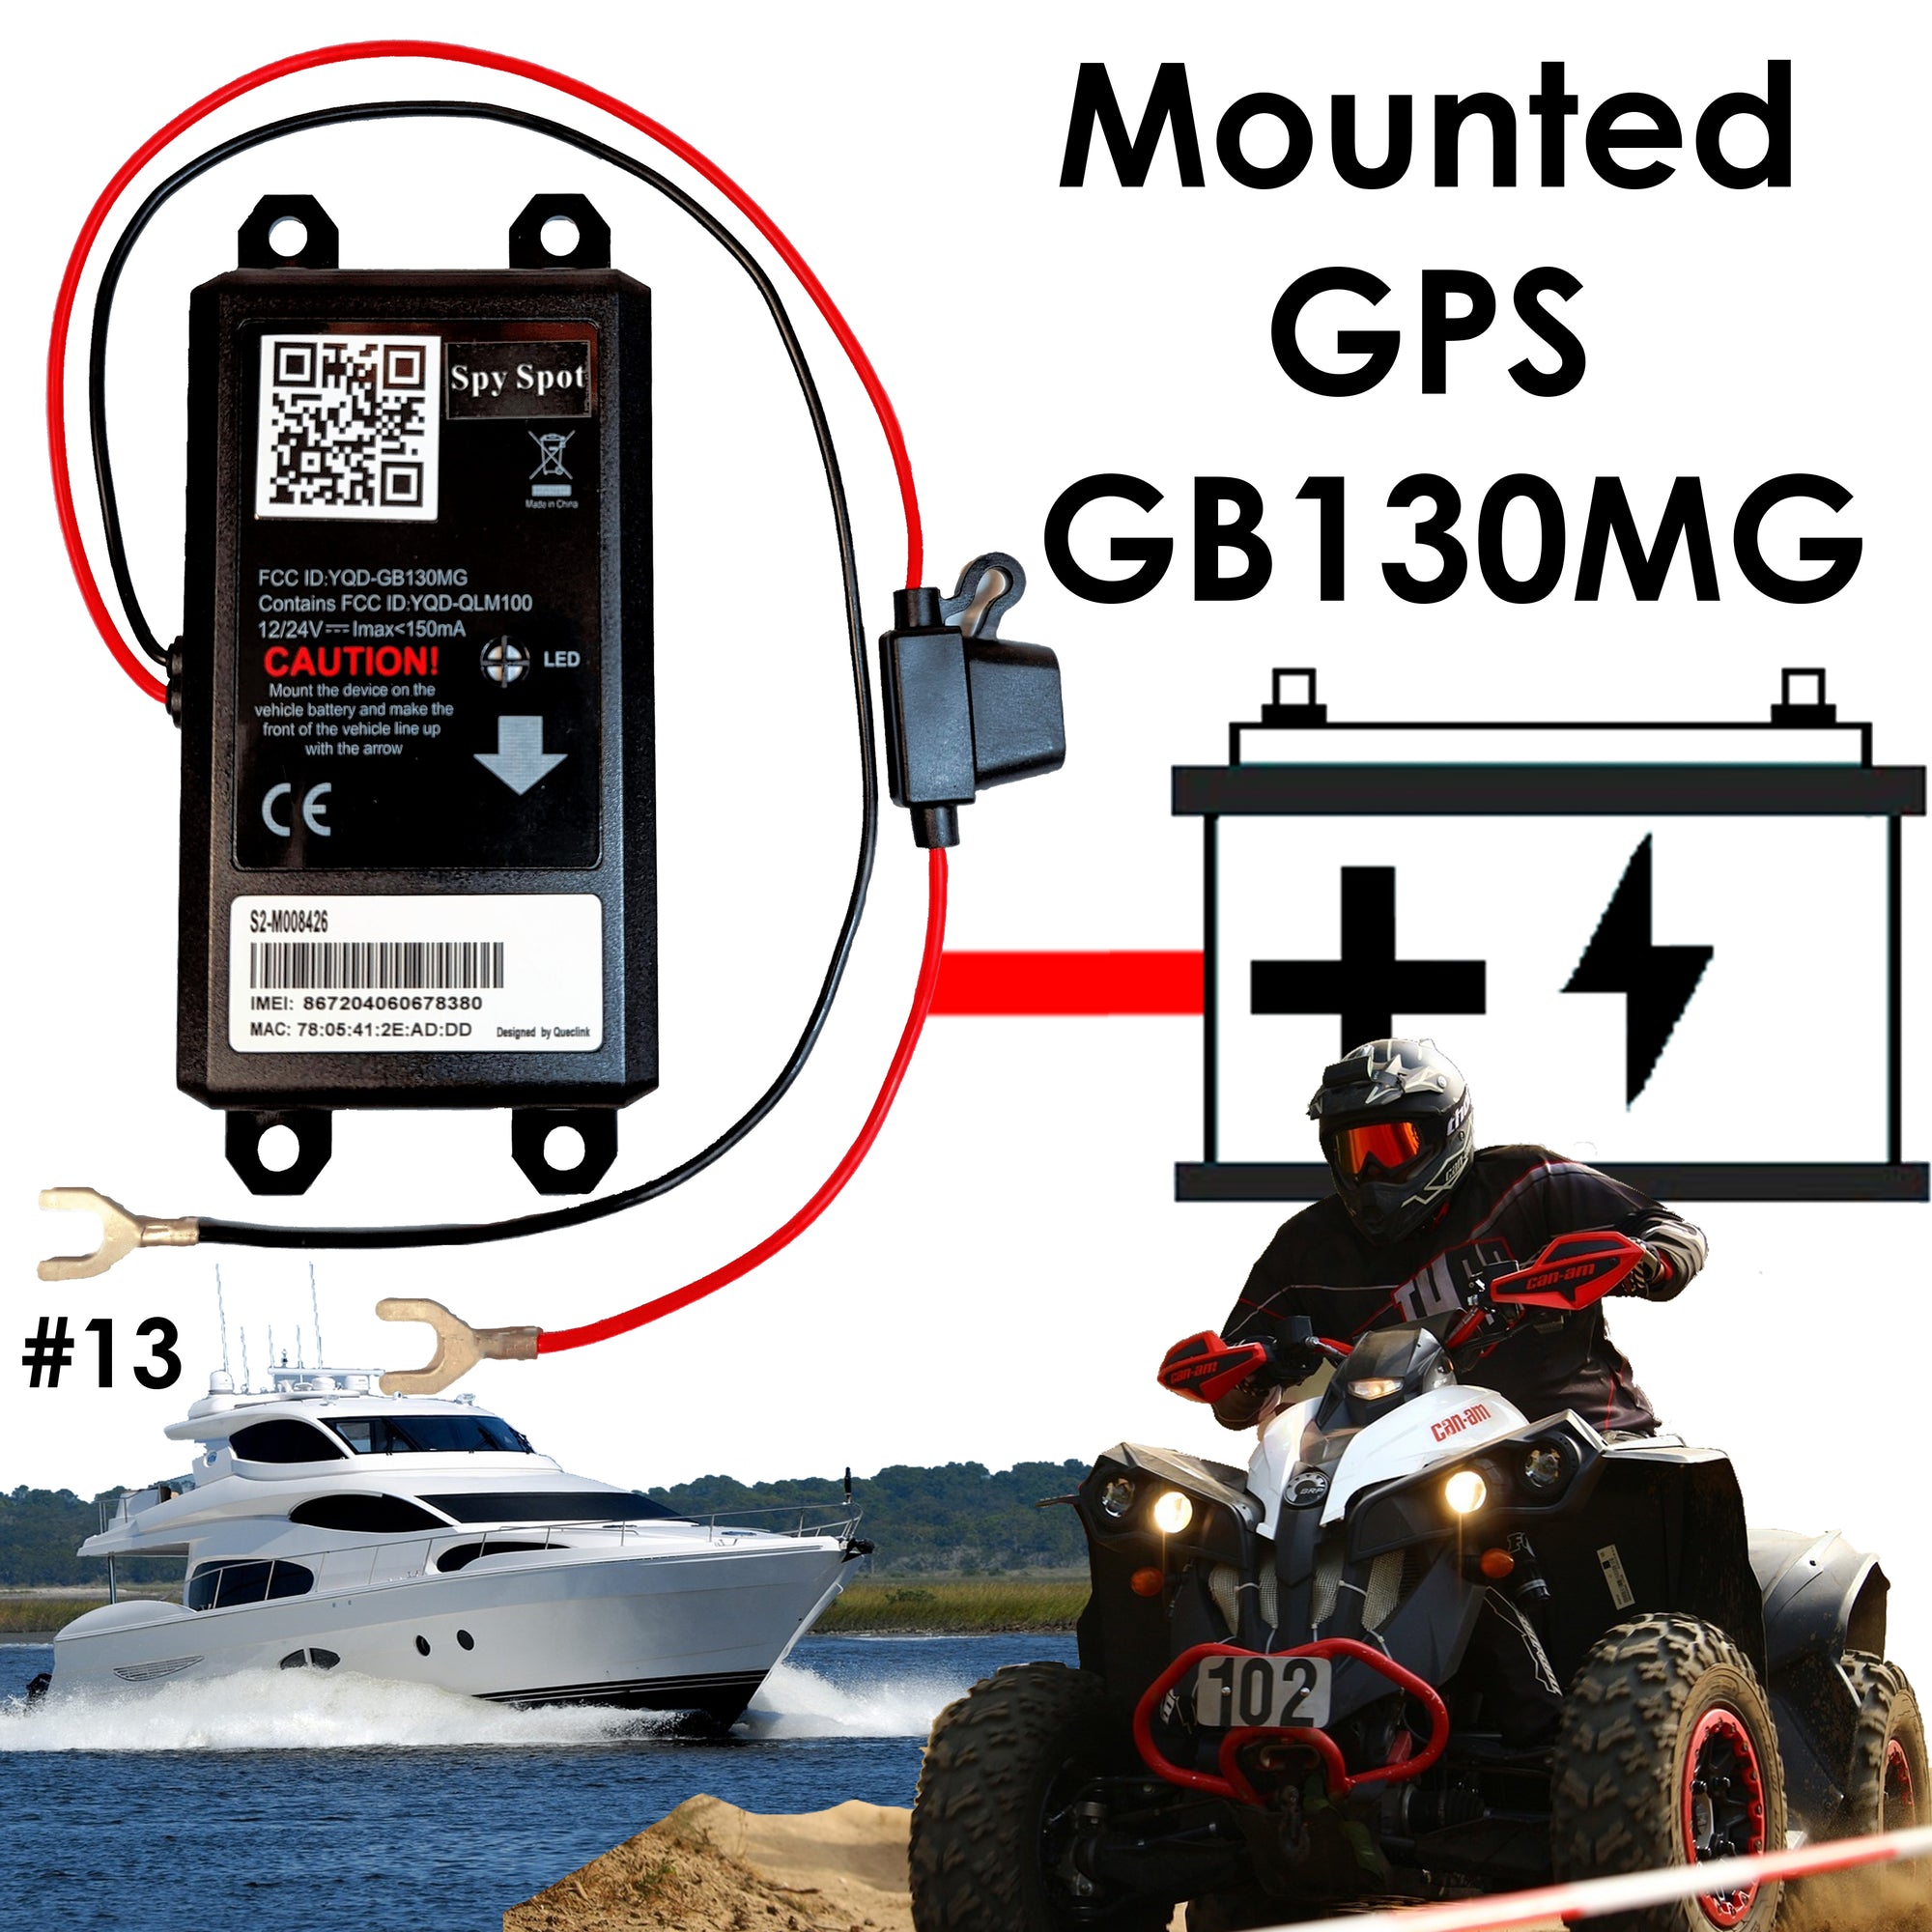 #13 - Mounted GPS Trackers #13